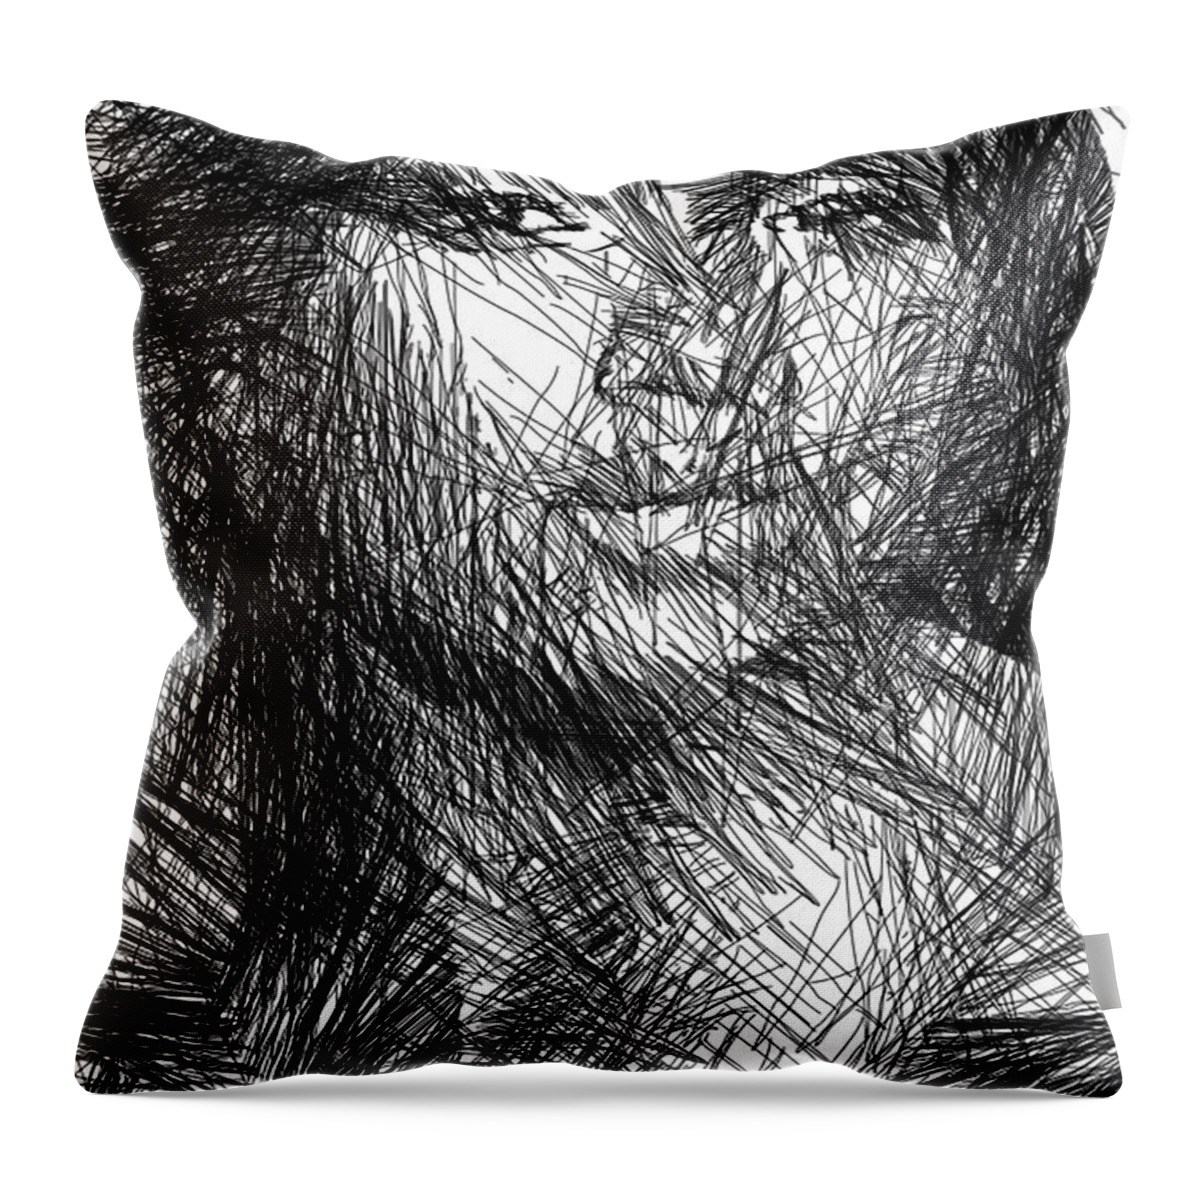 Art Throw Pillow featuring the digital art Facial Expressions #5 by Rafael Salazar